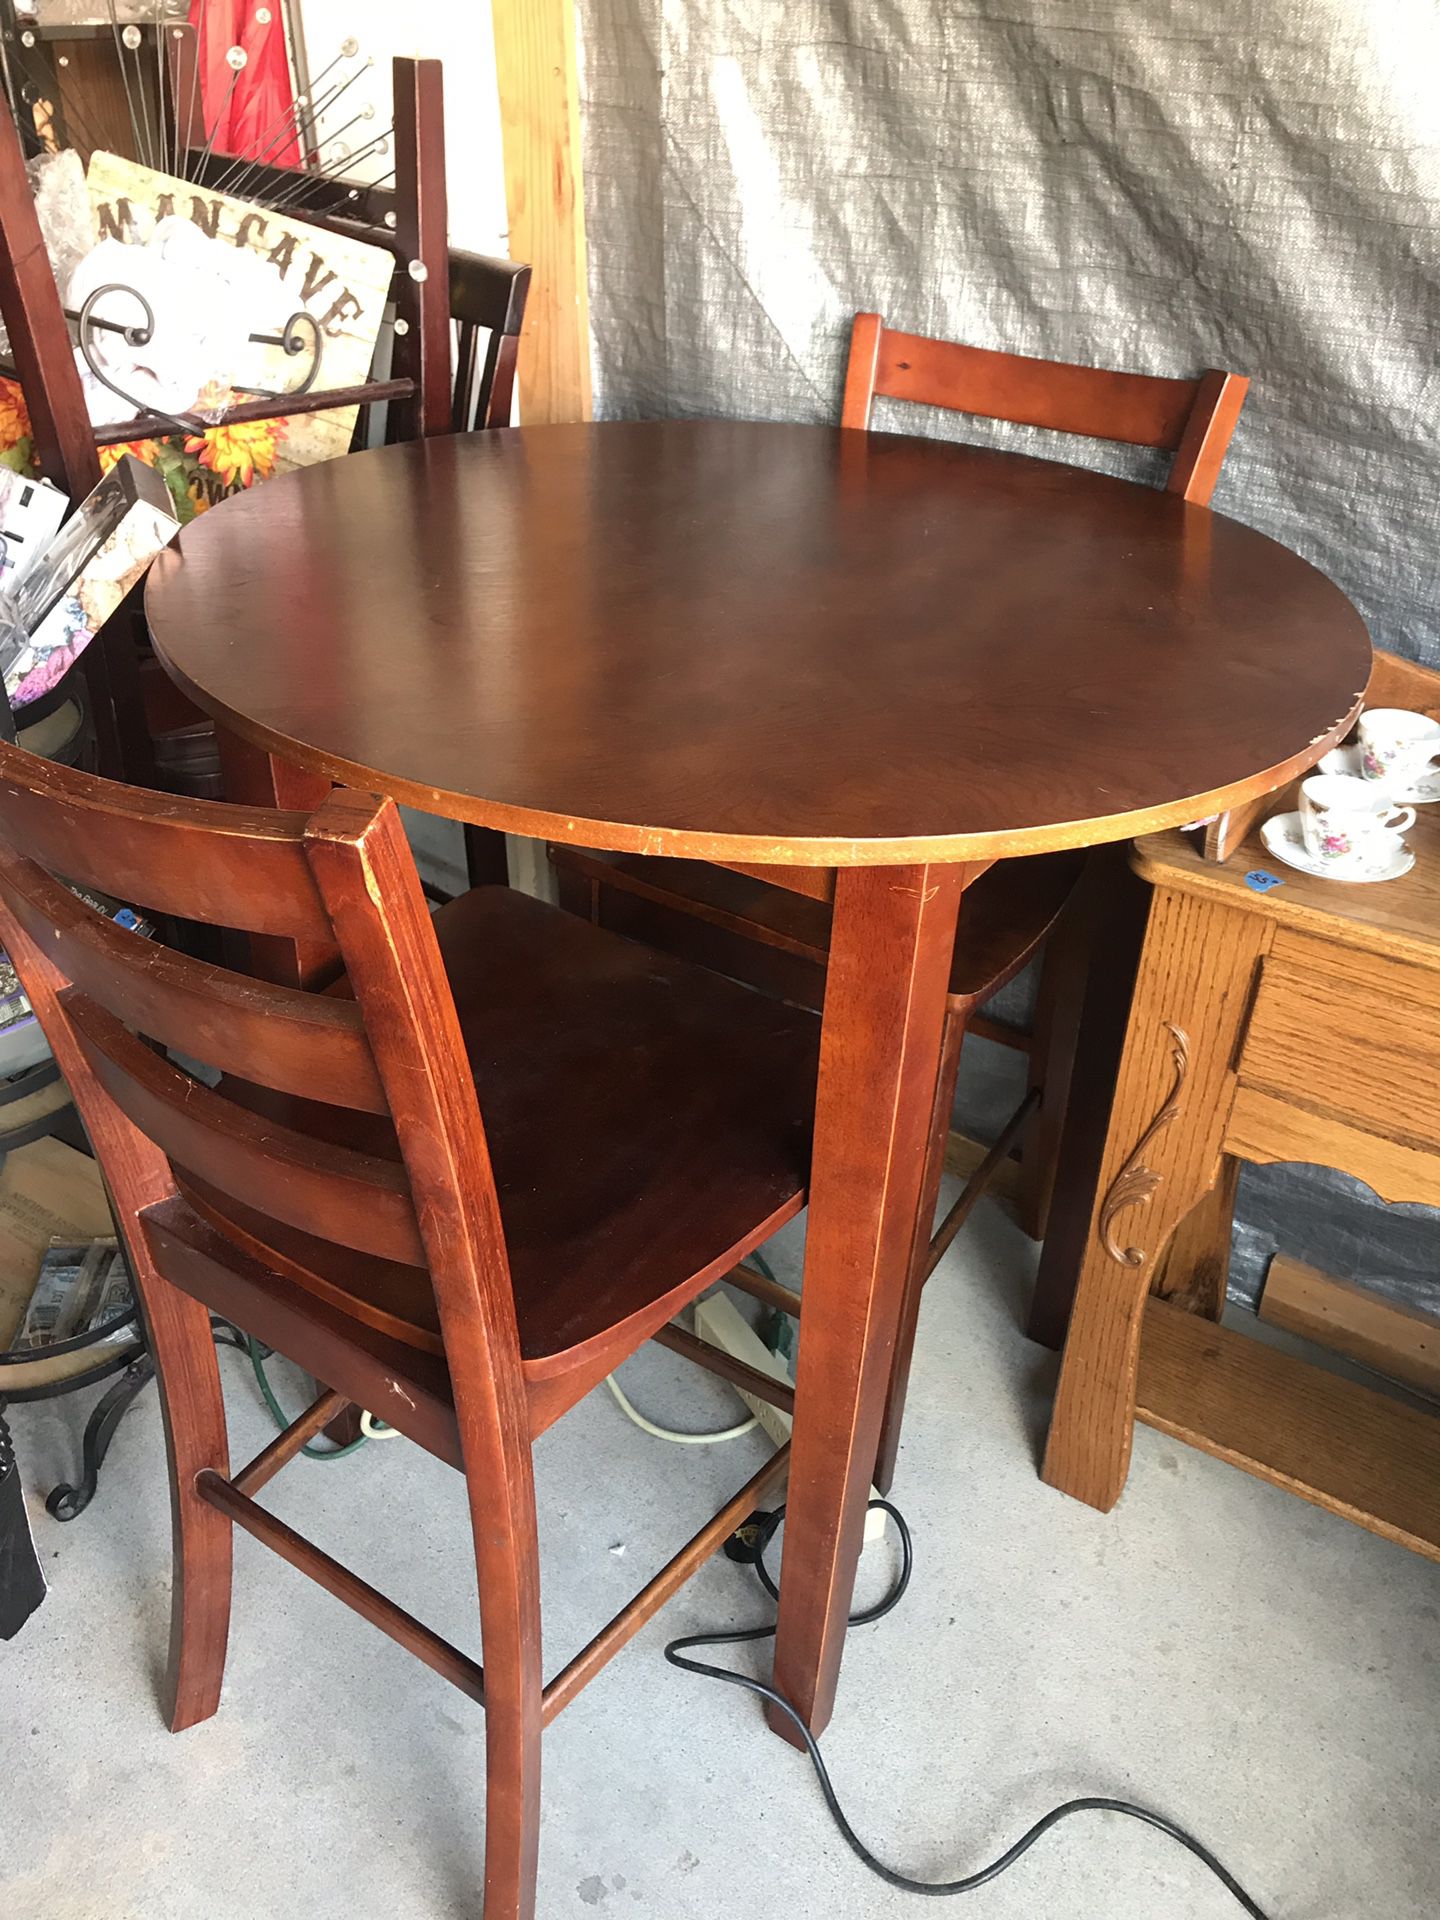 2 chair kitchen table set